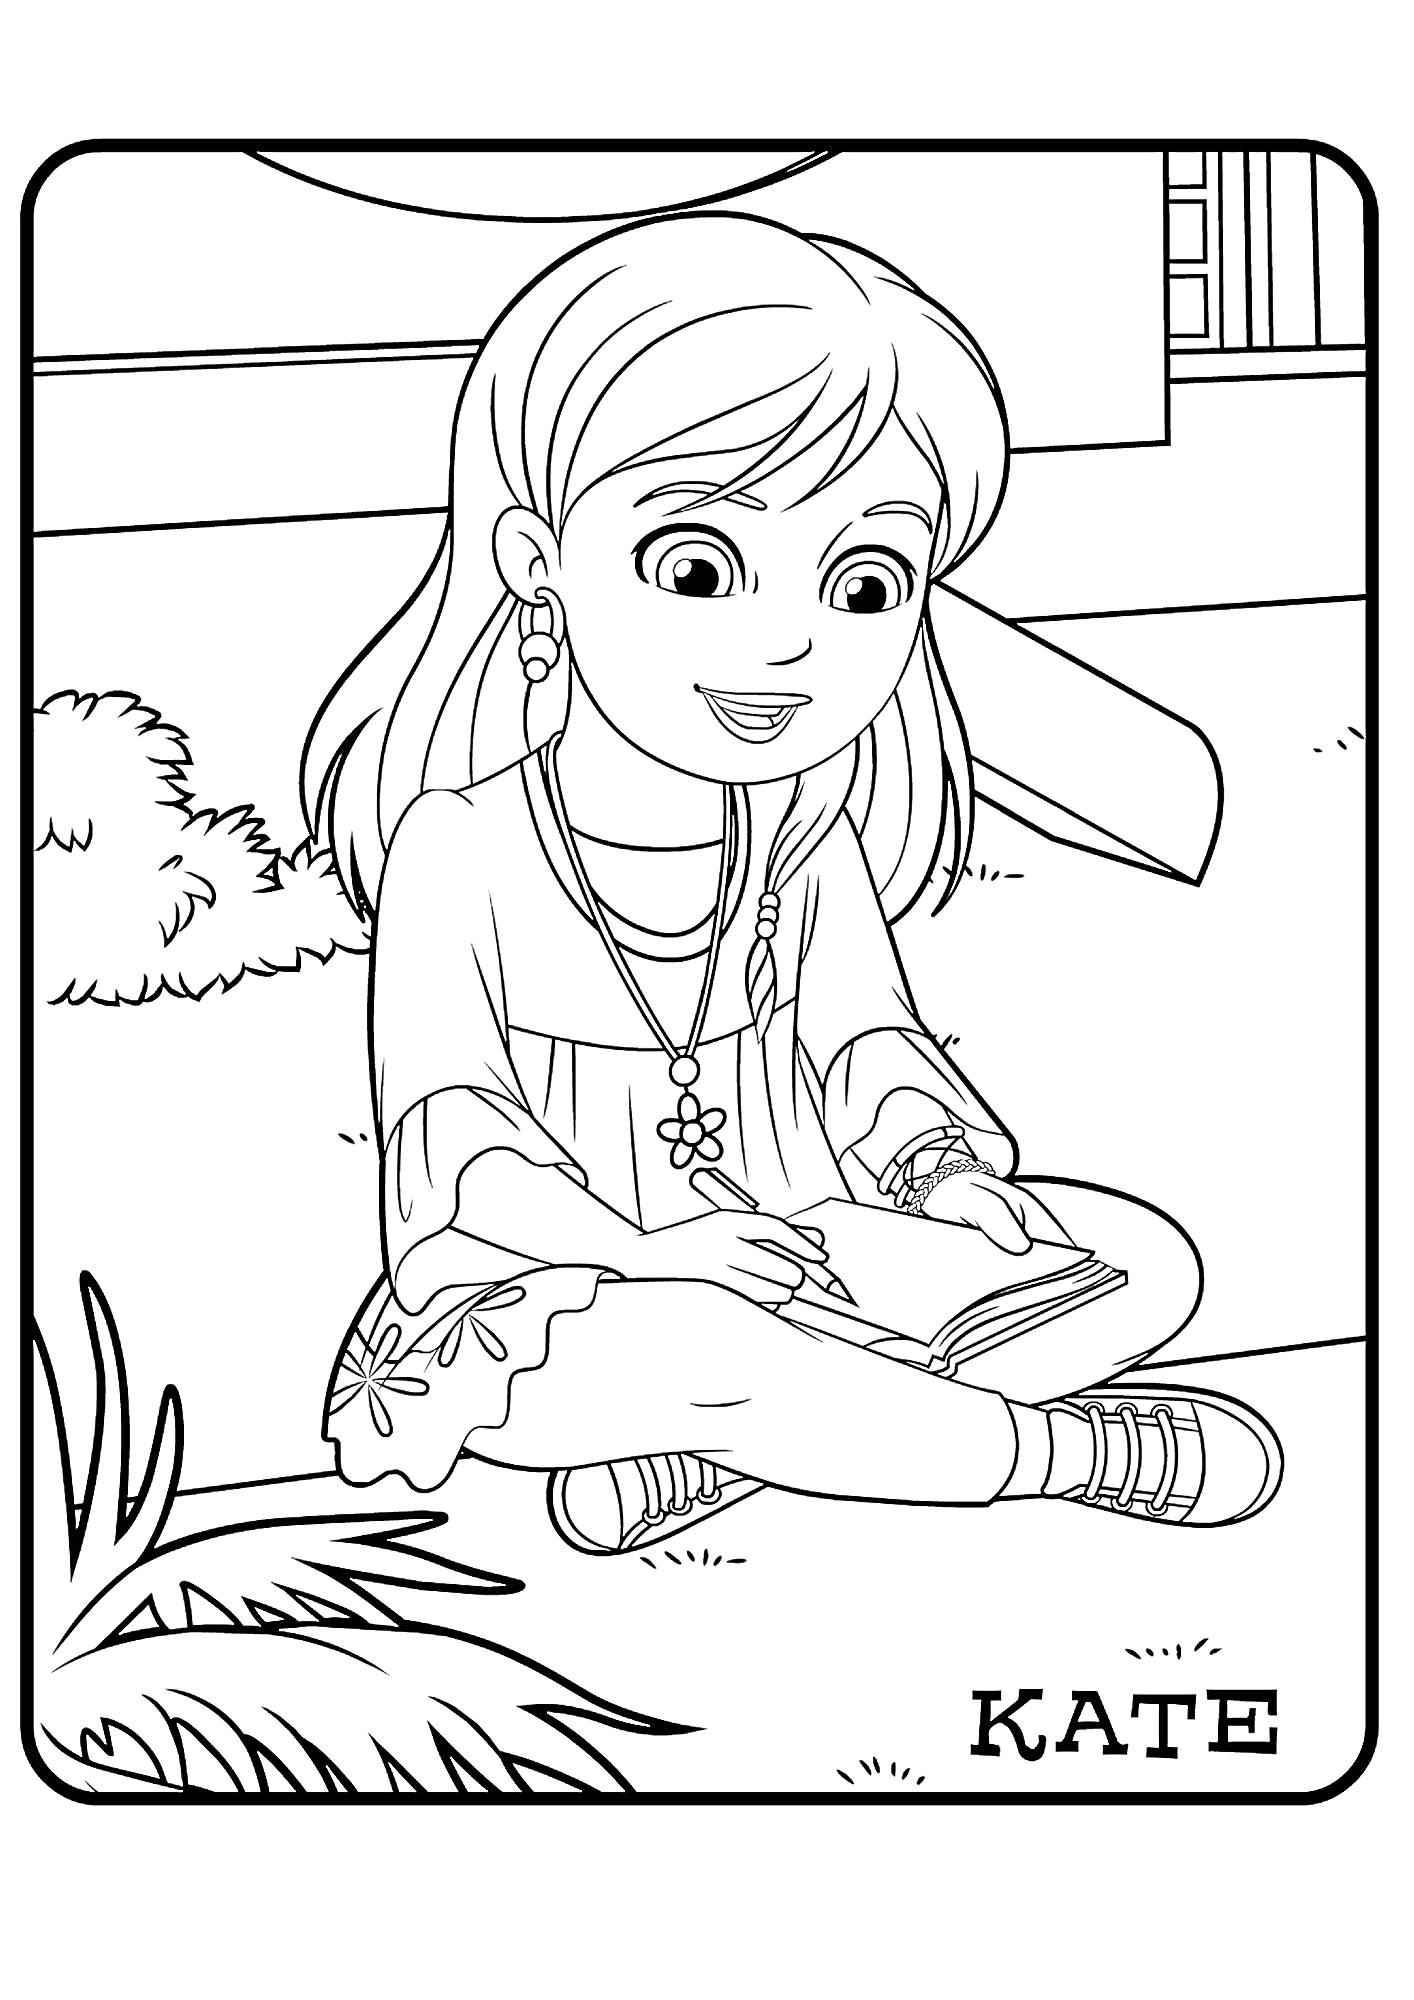 Раскраска Девочка с серёжками и браслетами, сидящая на траве, рисует в блокноте.